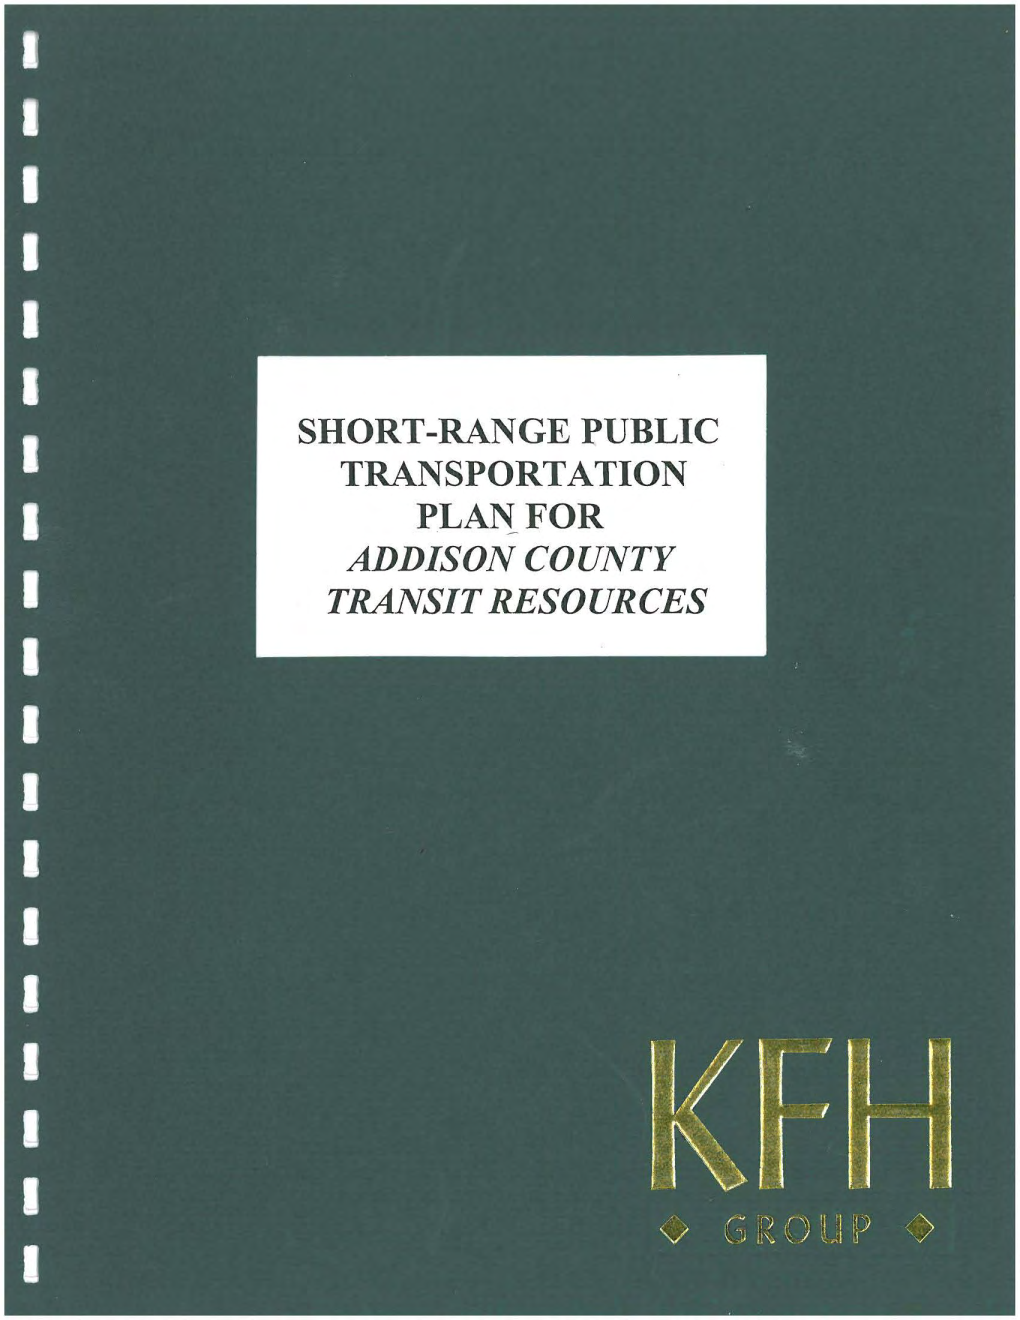 Short-Range Public Transportation Plan for Addison County Transit Resources Kfh Group, Inc